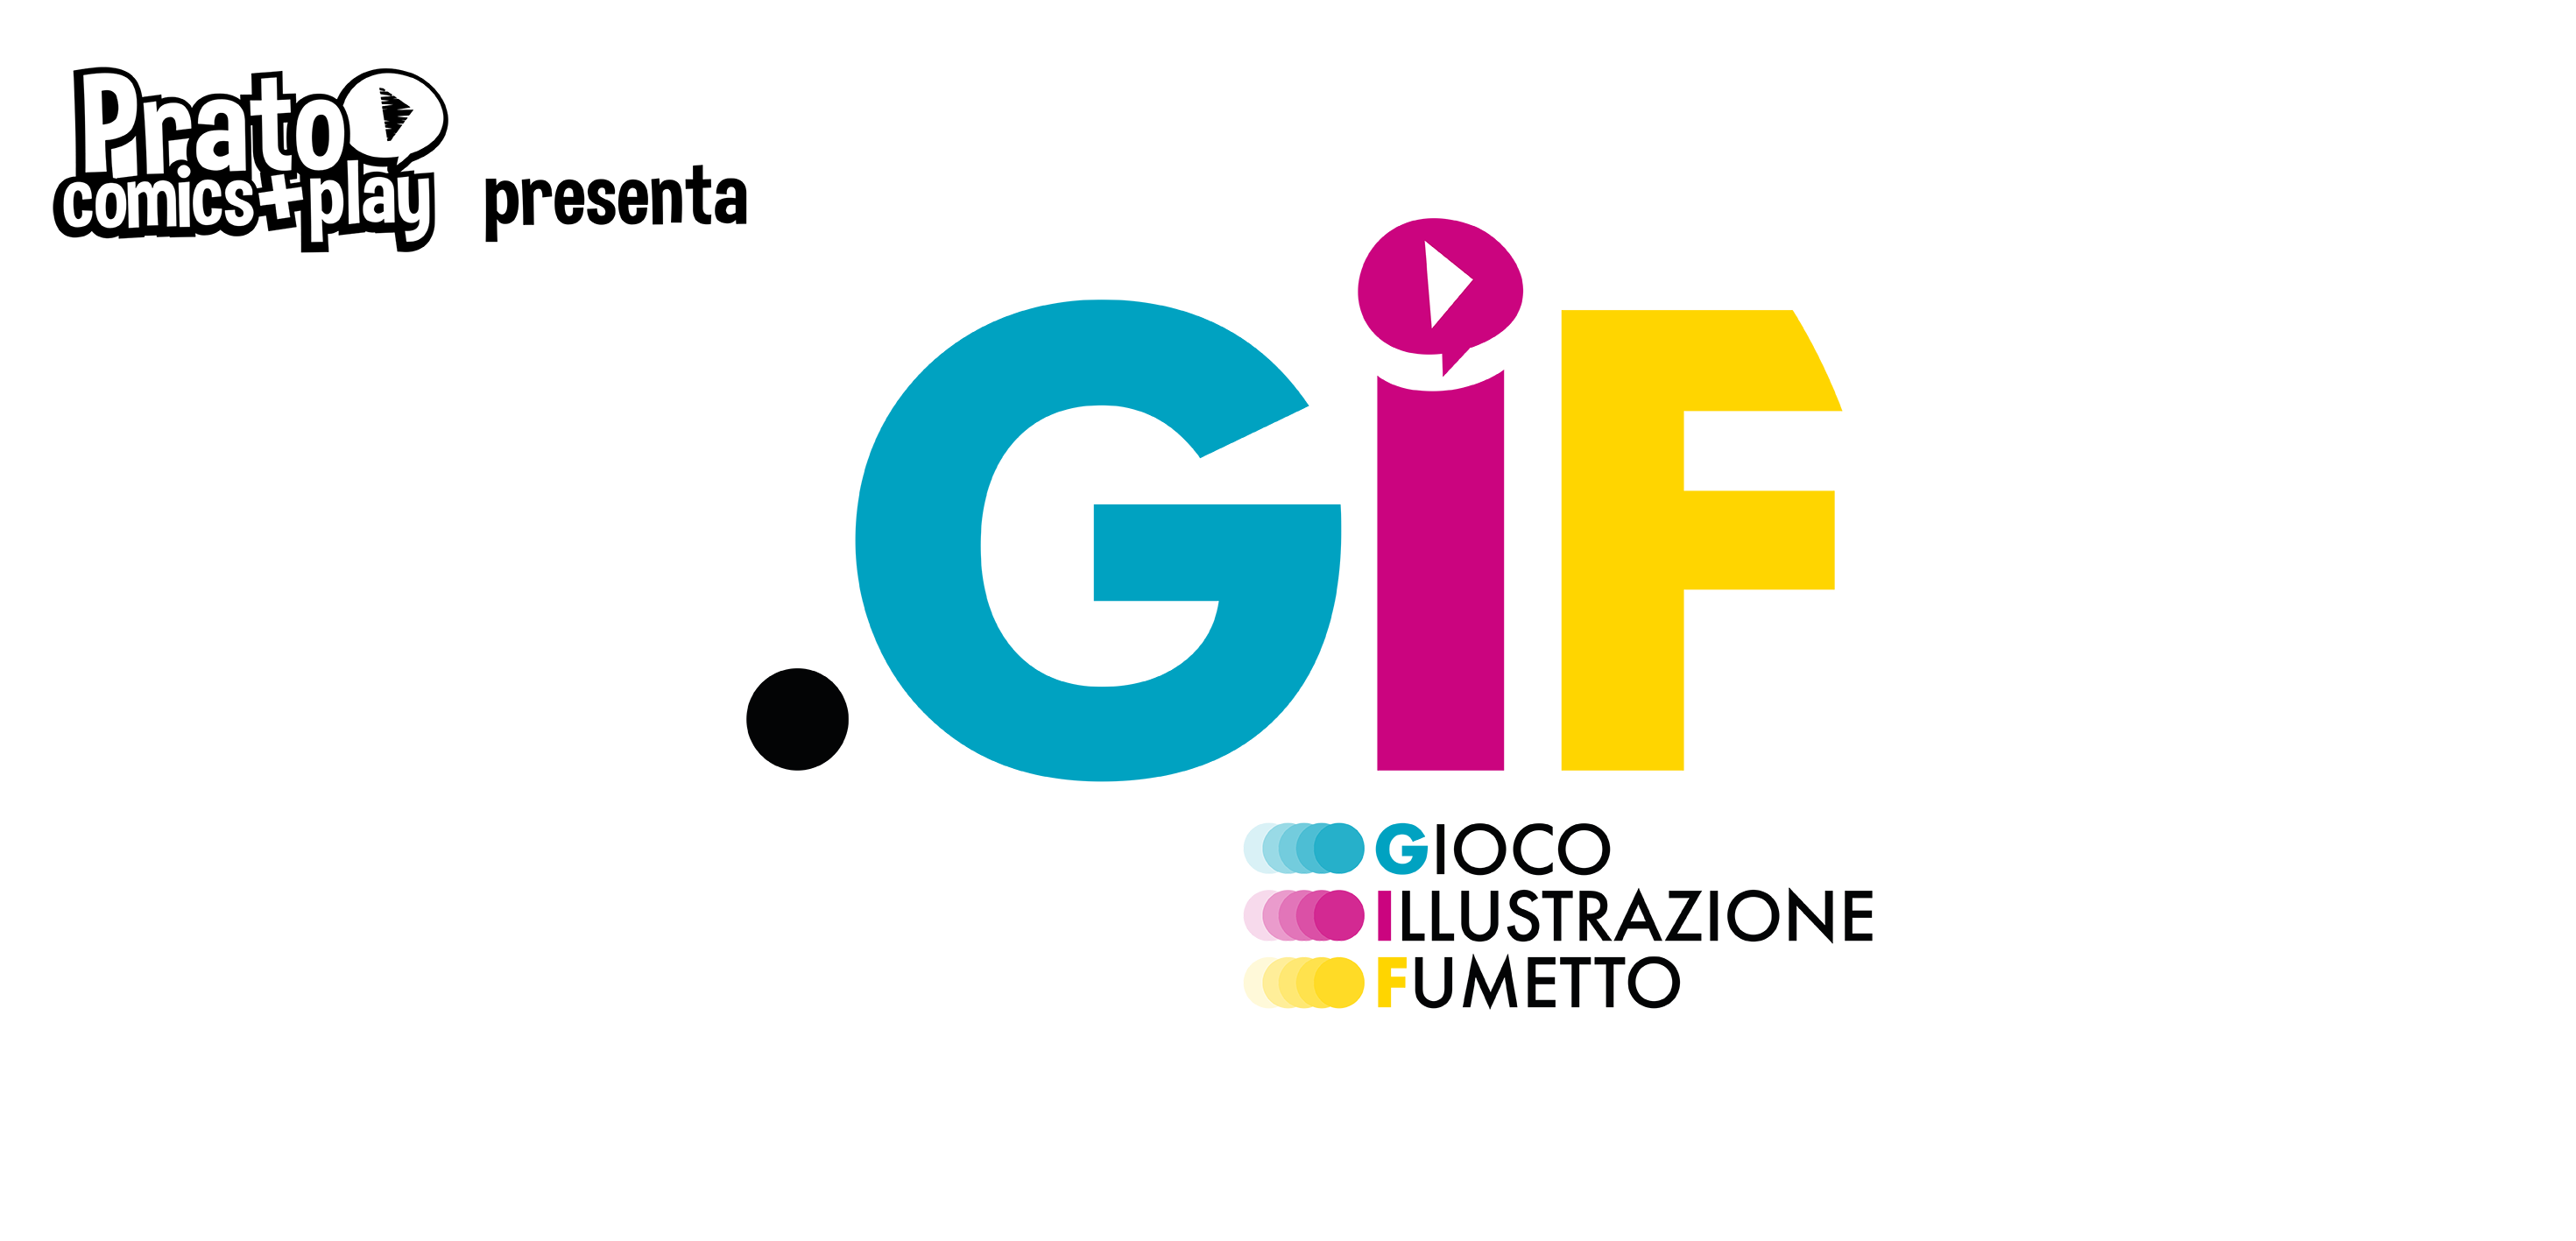 logo gif